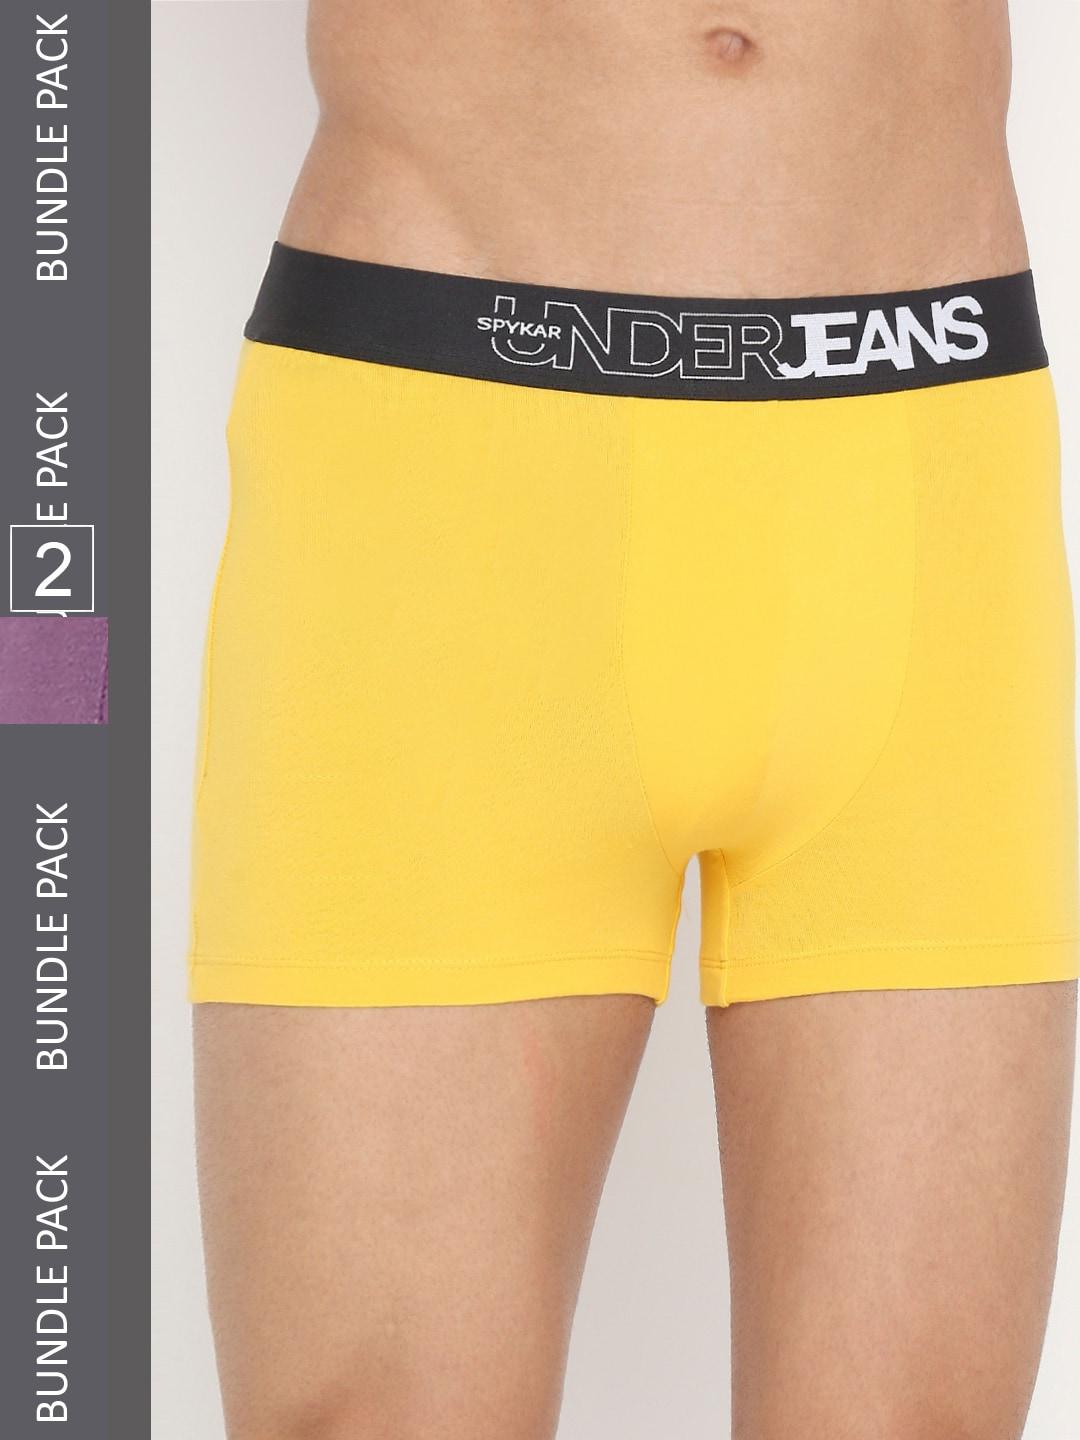 UnderJeans by Spykar Men Pack Of 2 Assorted Trunks